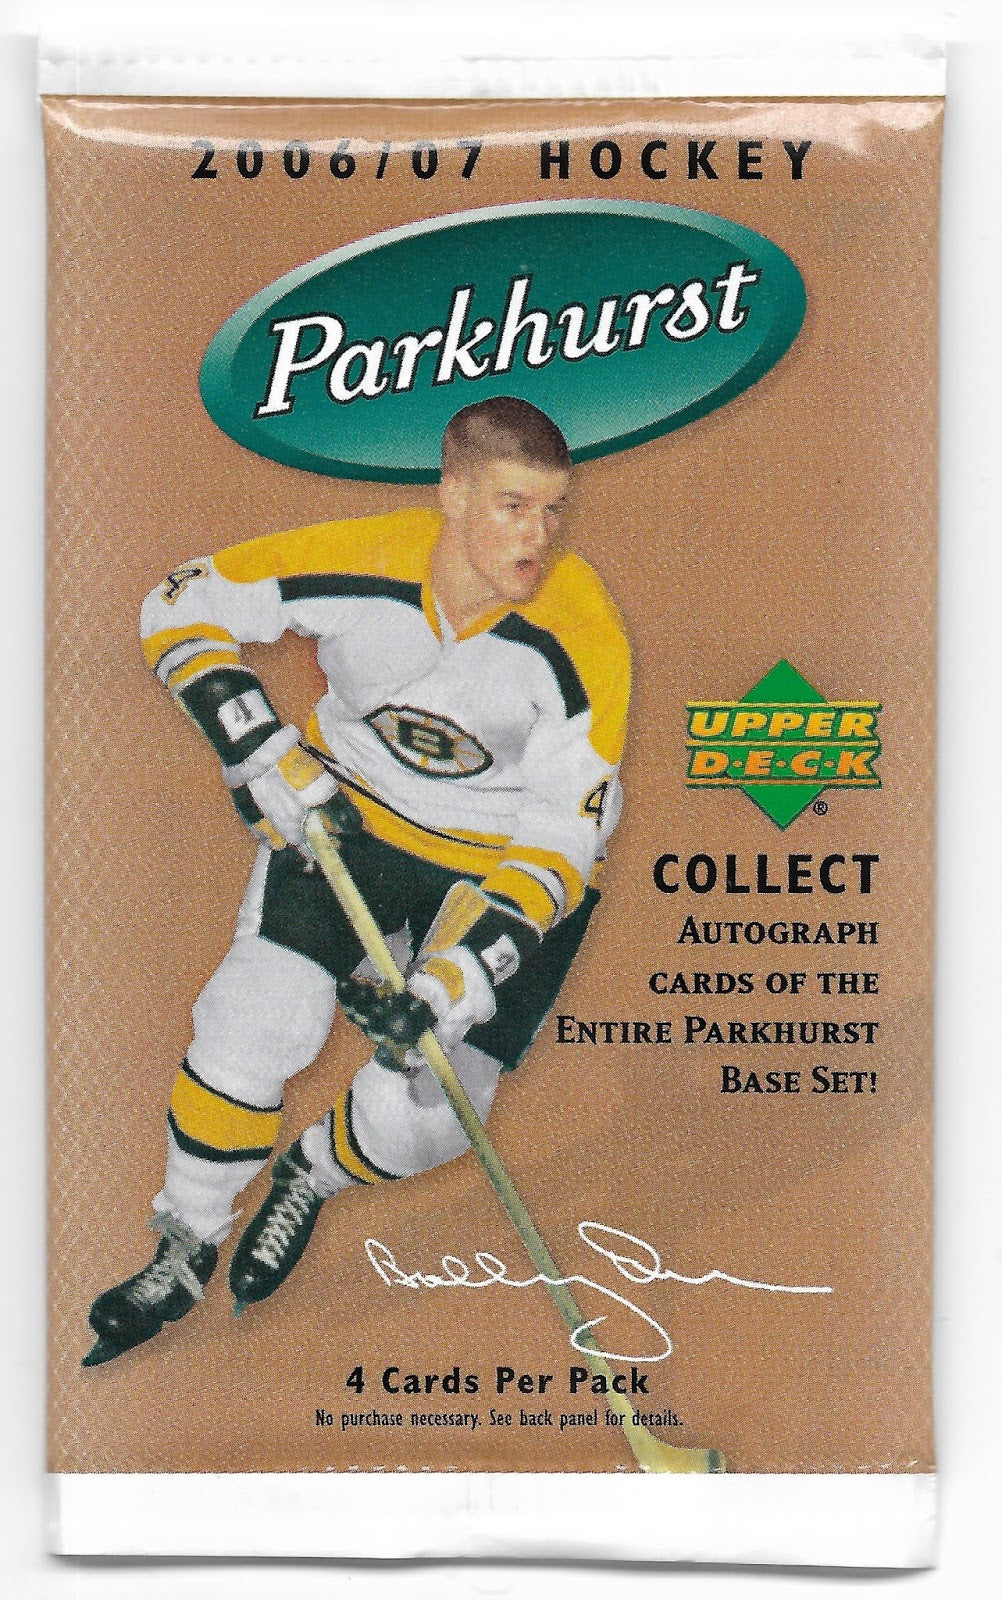 2006-07 Parkhurst Hockey Retail Pack | Eastridge Sports Cards